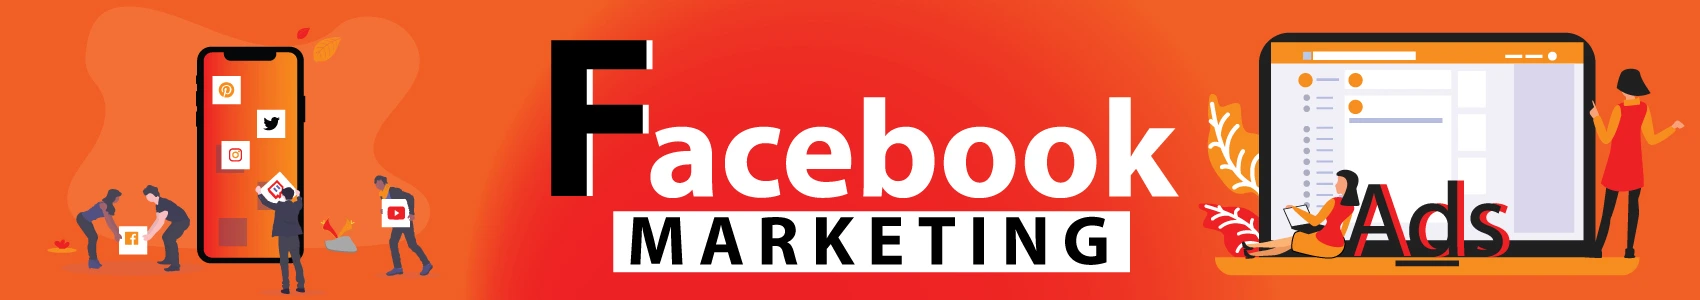 Facebook Ads - Facebook Ad Management